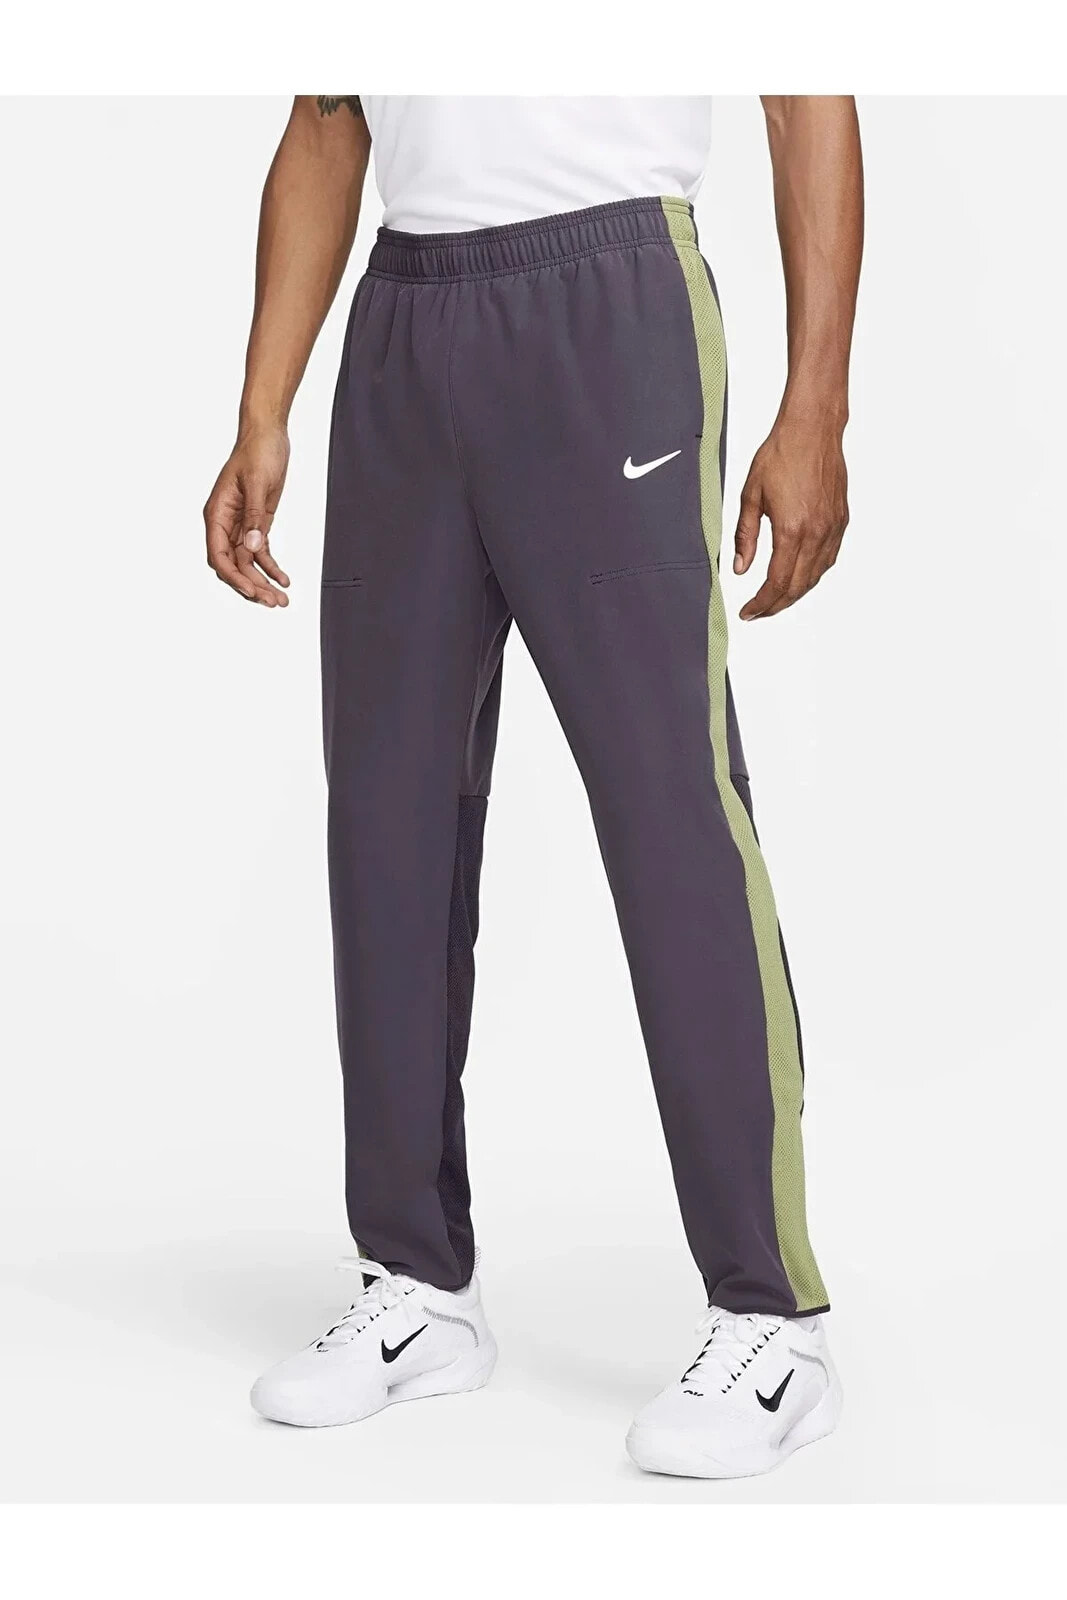 NikeCourt Advantage Men's Tennis Pants